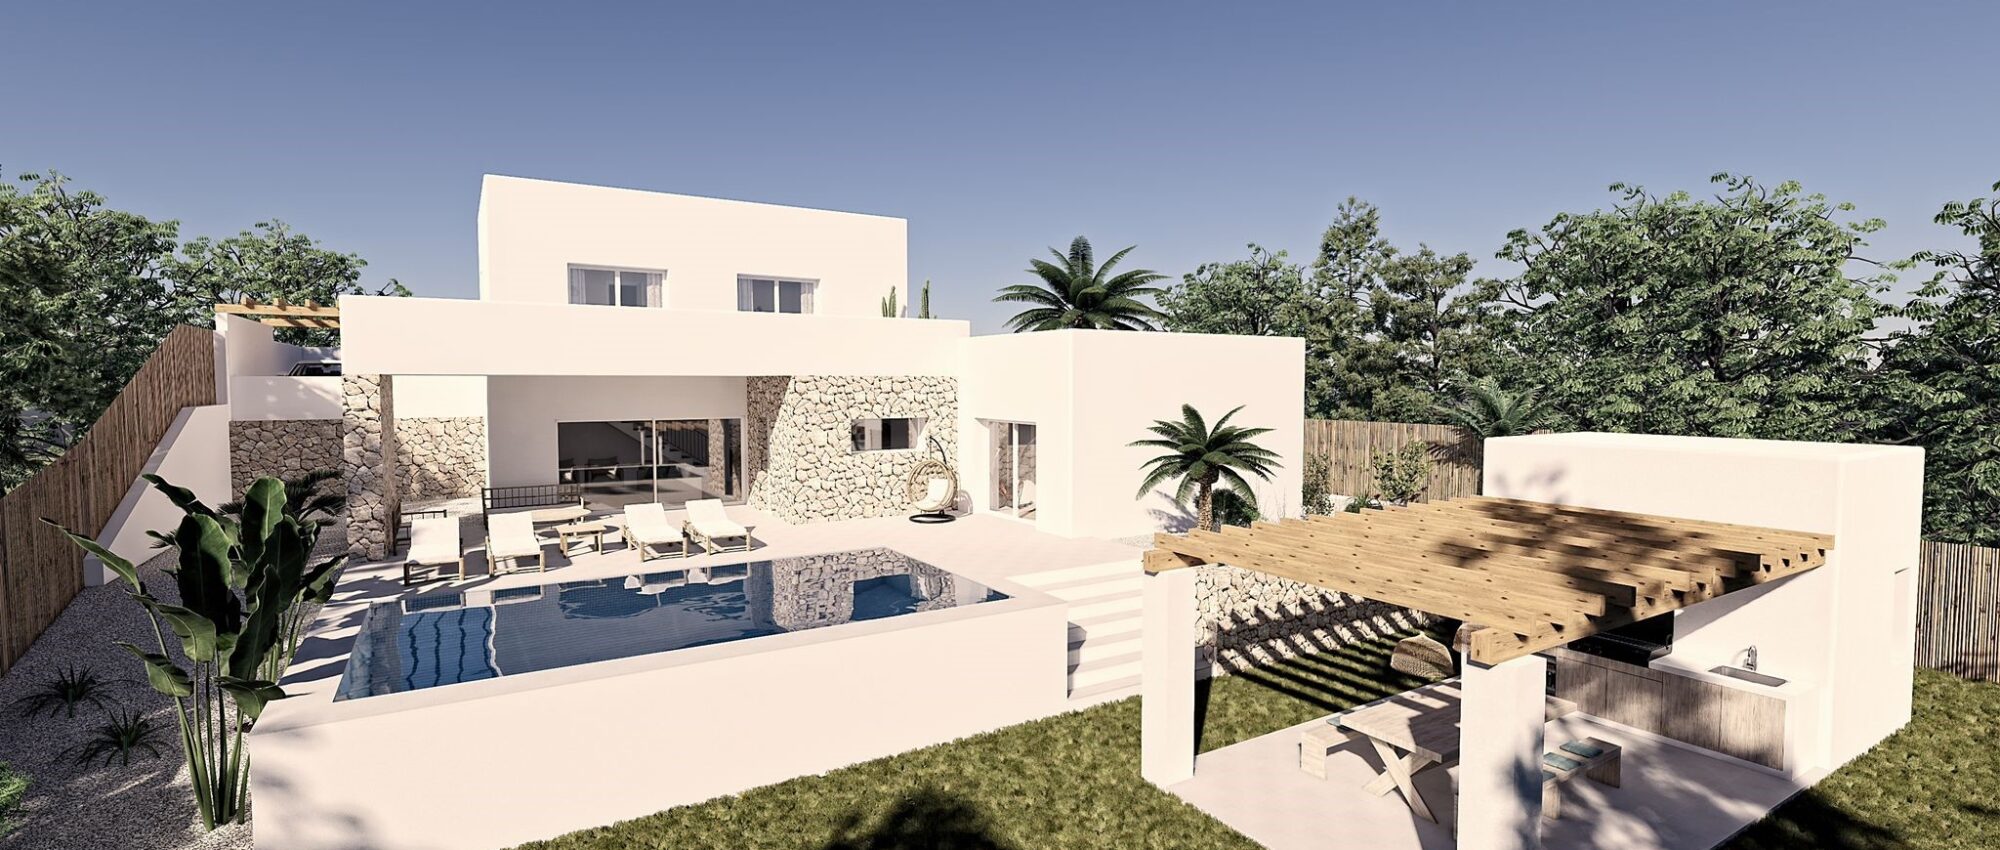 Luxury new Ibiza style 4 bedroom and 5 bathroom villa. Walking distance to Moraira